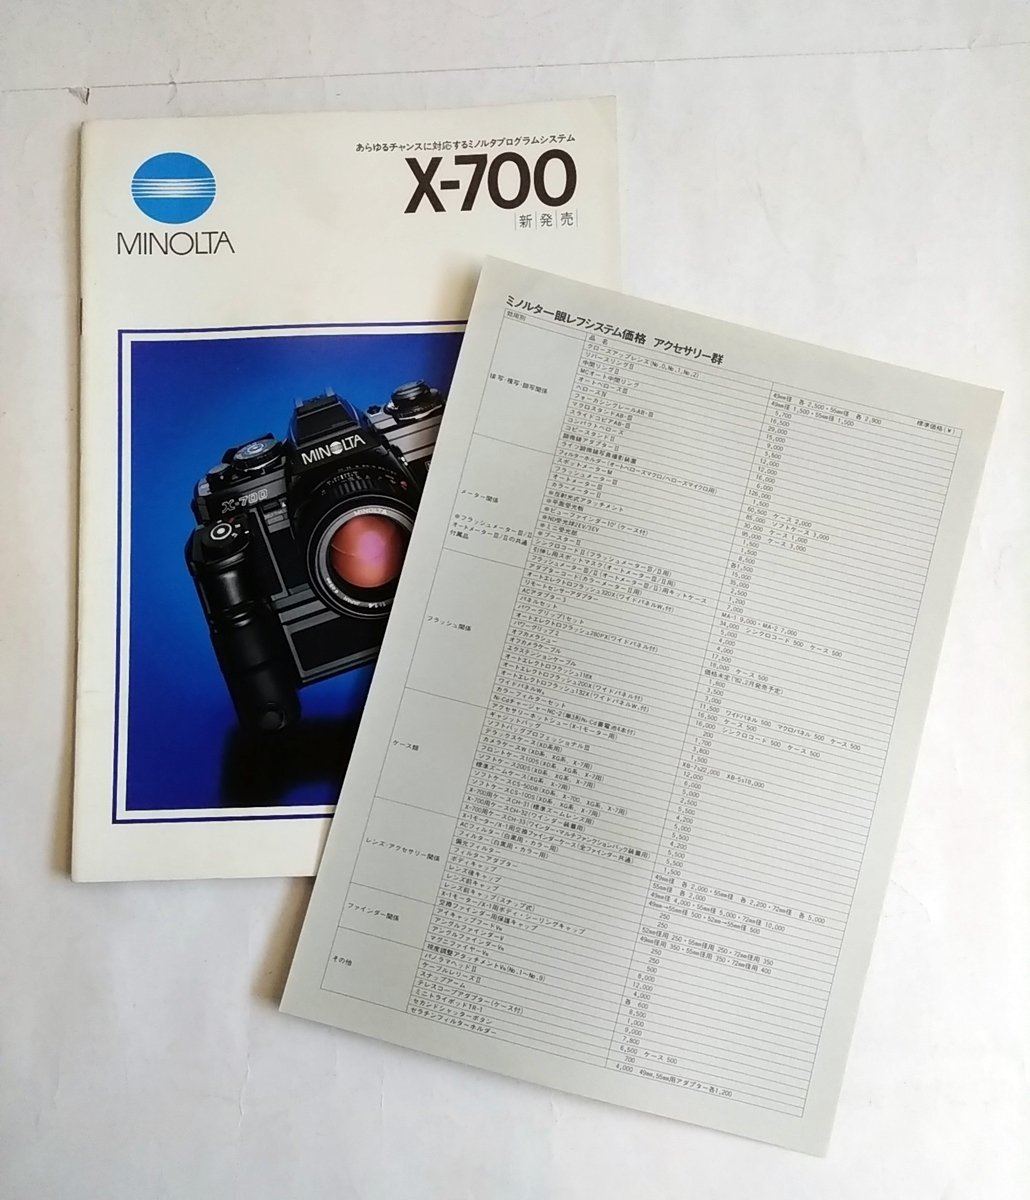 [W2388] MINOLTA X-700 catalog / Minolta system specification accessory etc. film camera making year unknown used book